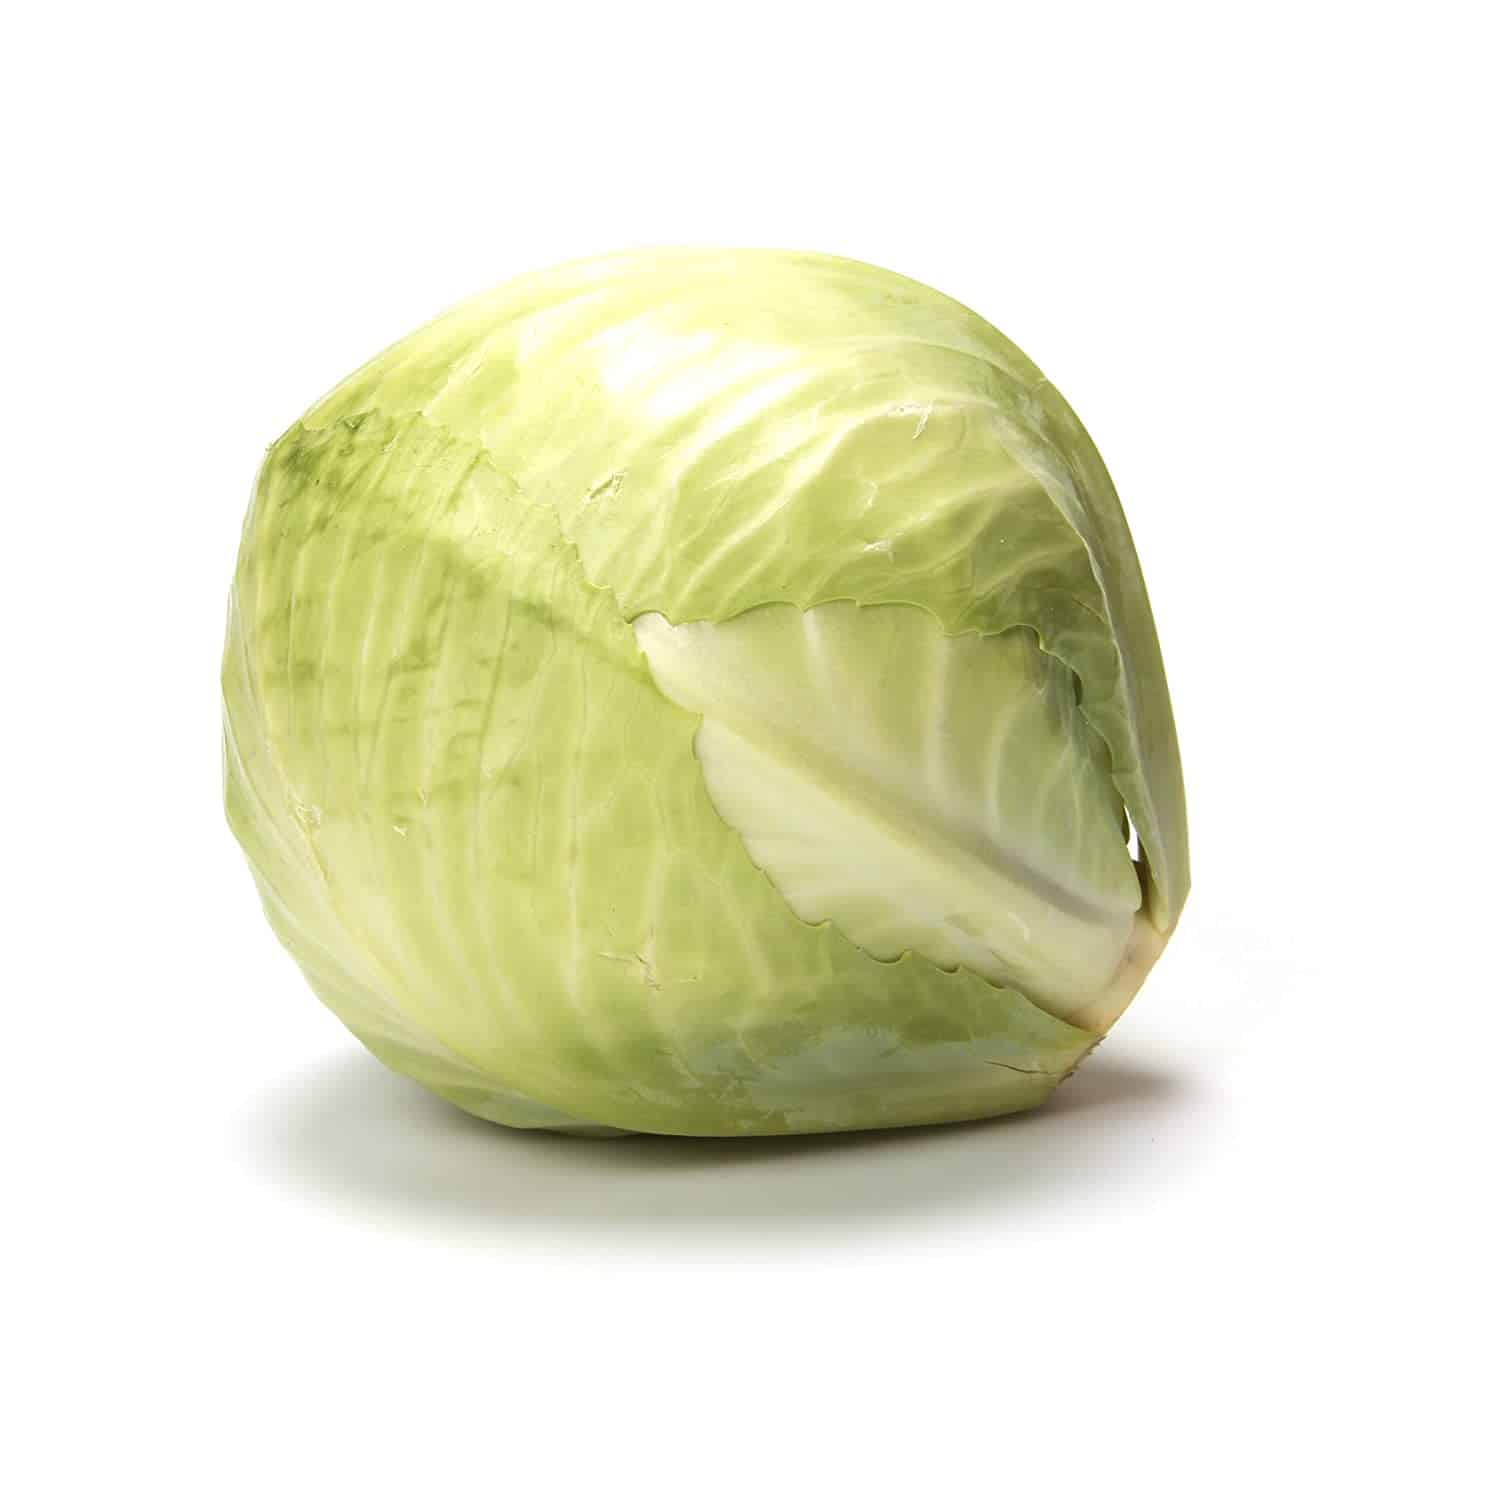 Organic Green Cabbage Per Each